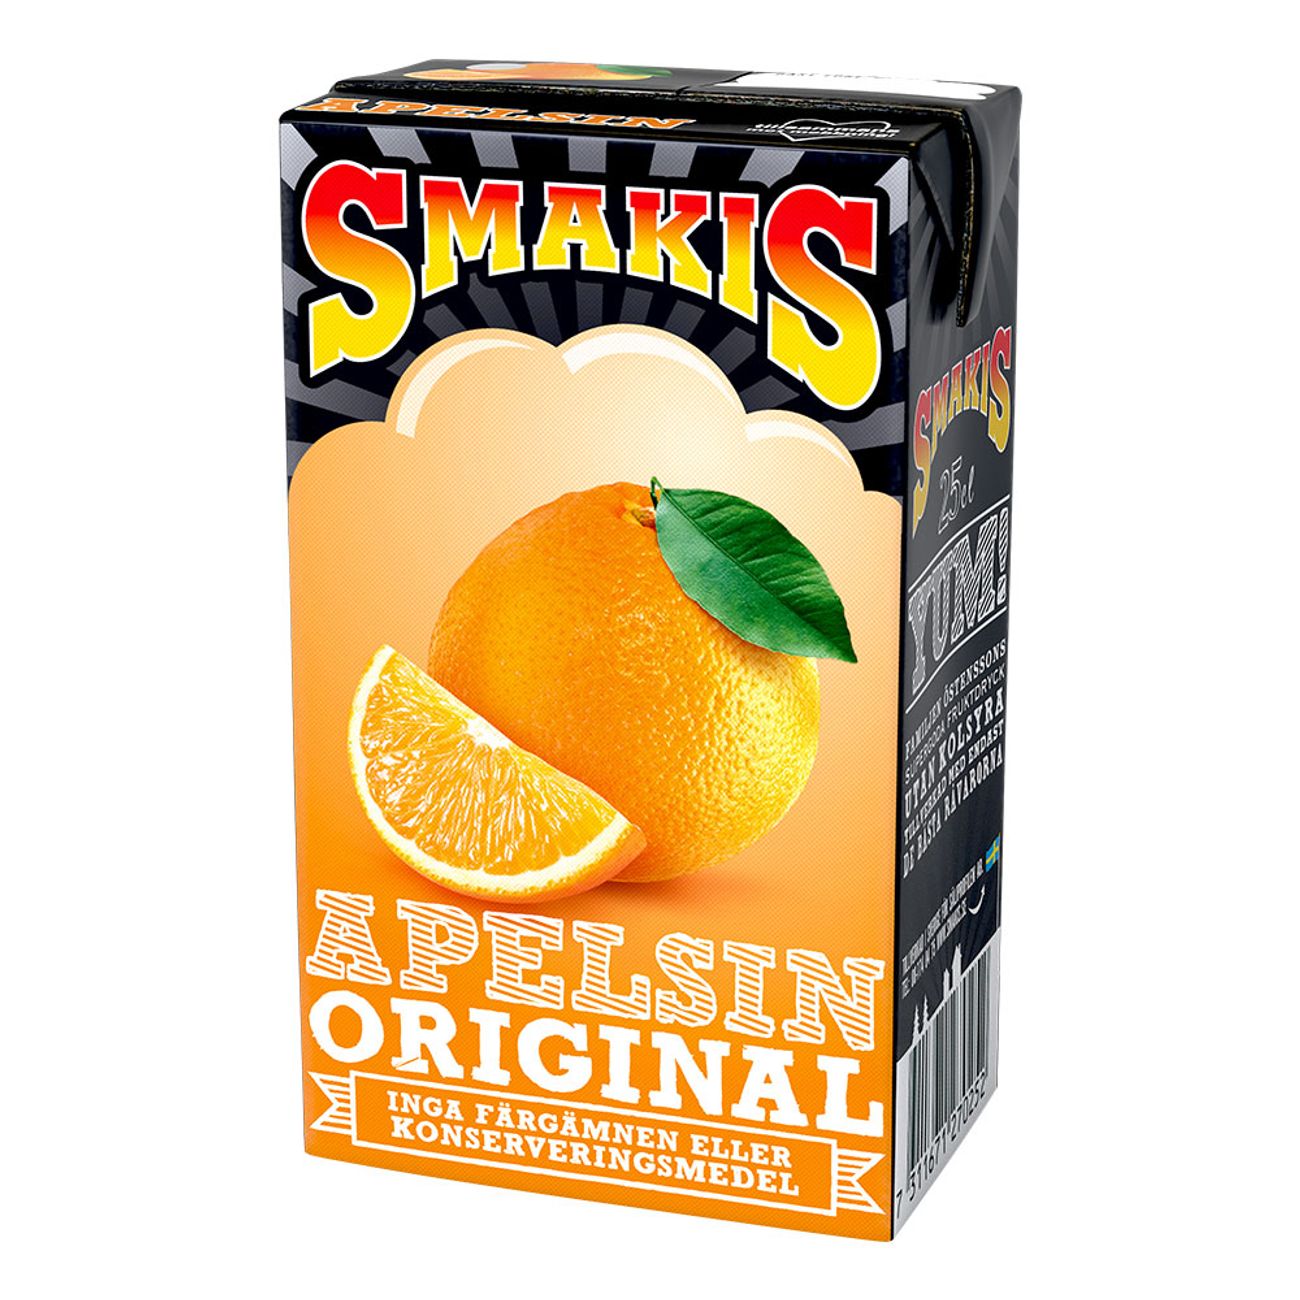 smakis-apelsin-original-80042-1